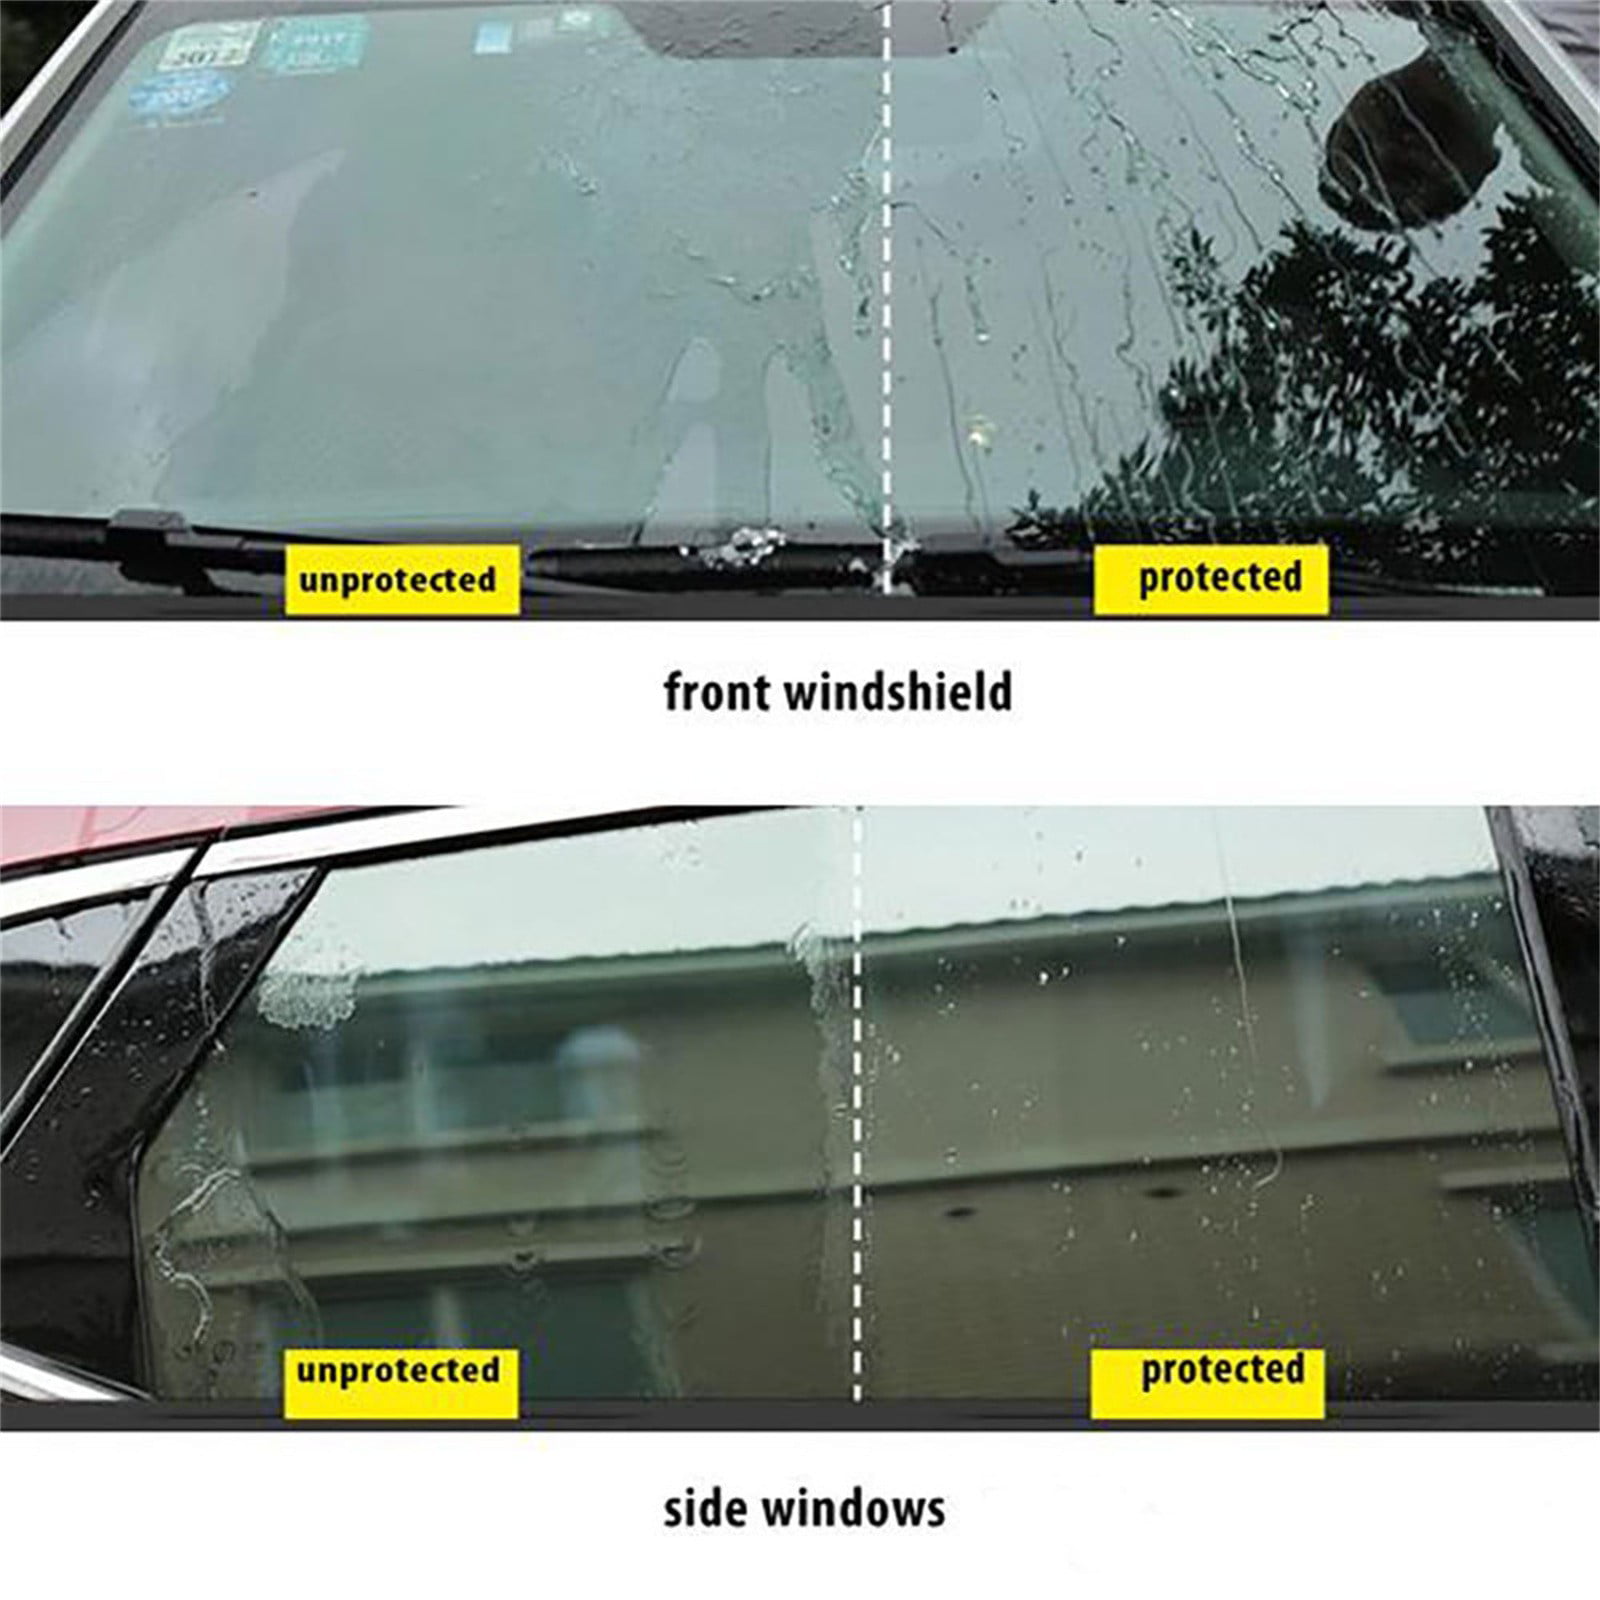 Source Window glass & Windshield Water-repellent coating WINDOW CRYSTAL  30ml by SENSHA on m.